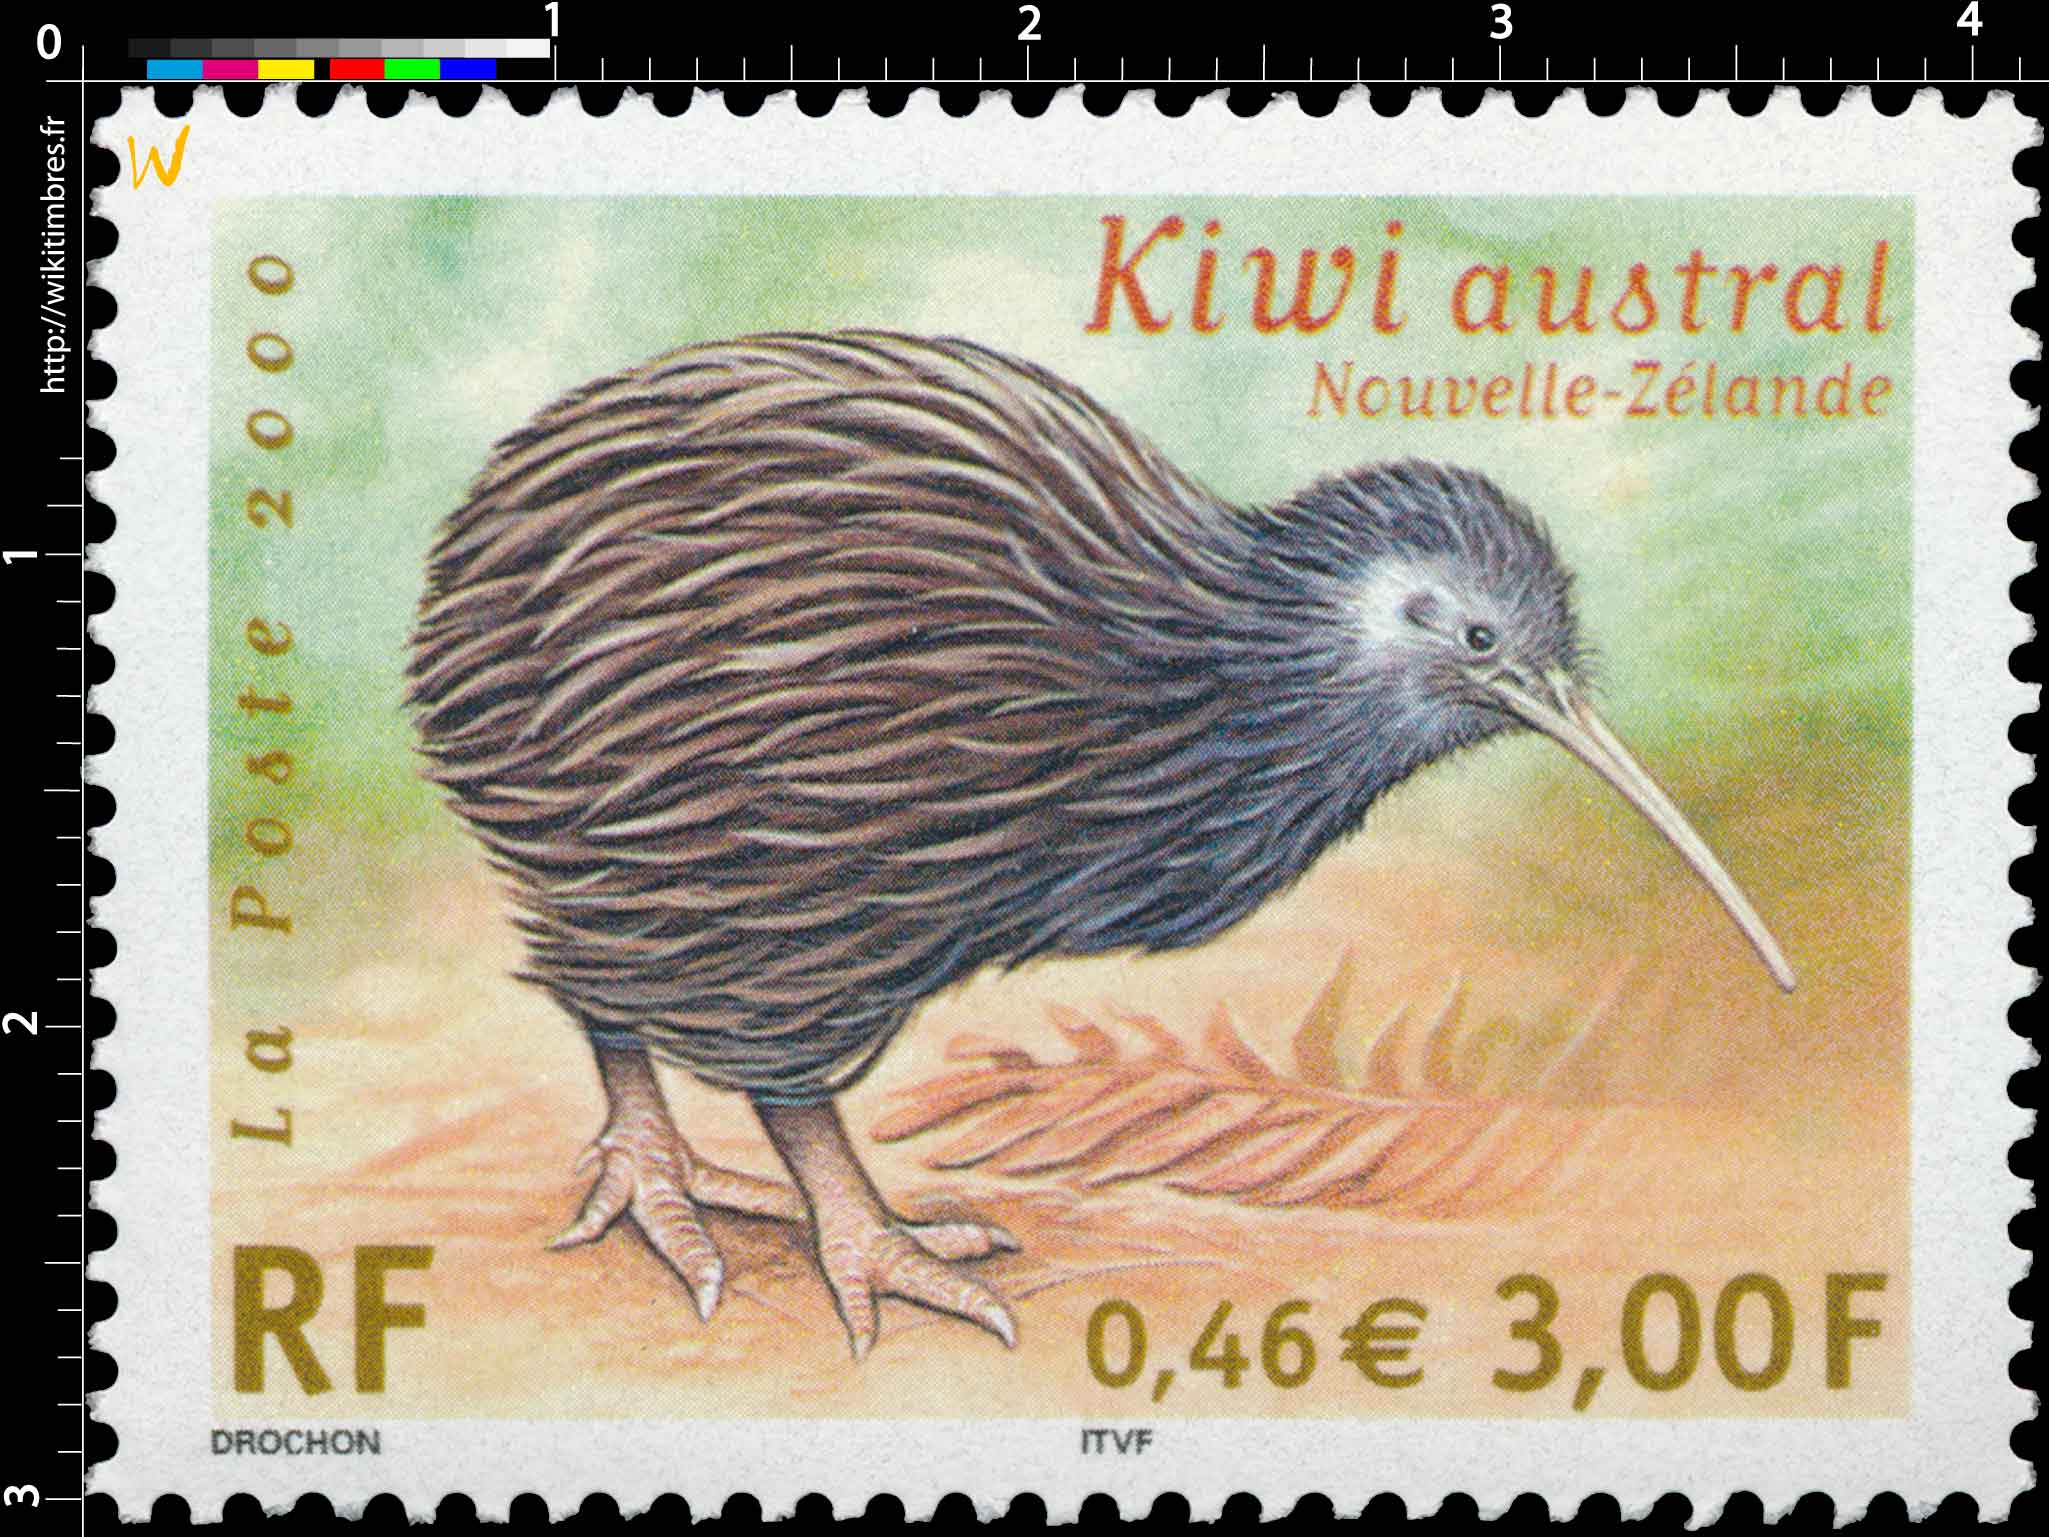 2000 Kiwi austral Nouvelle-Zélande